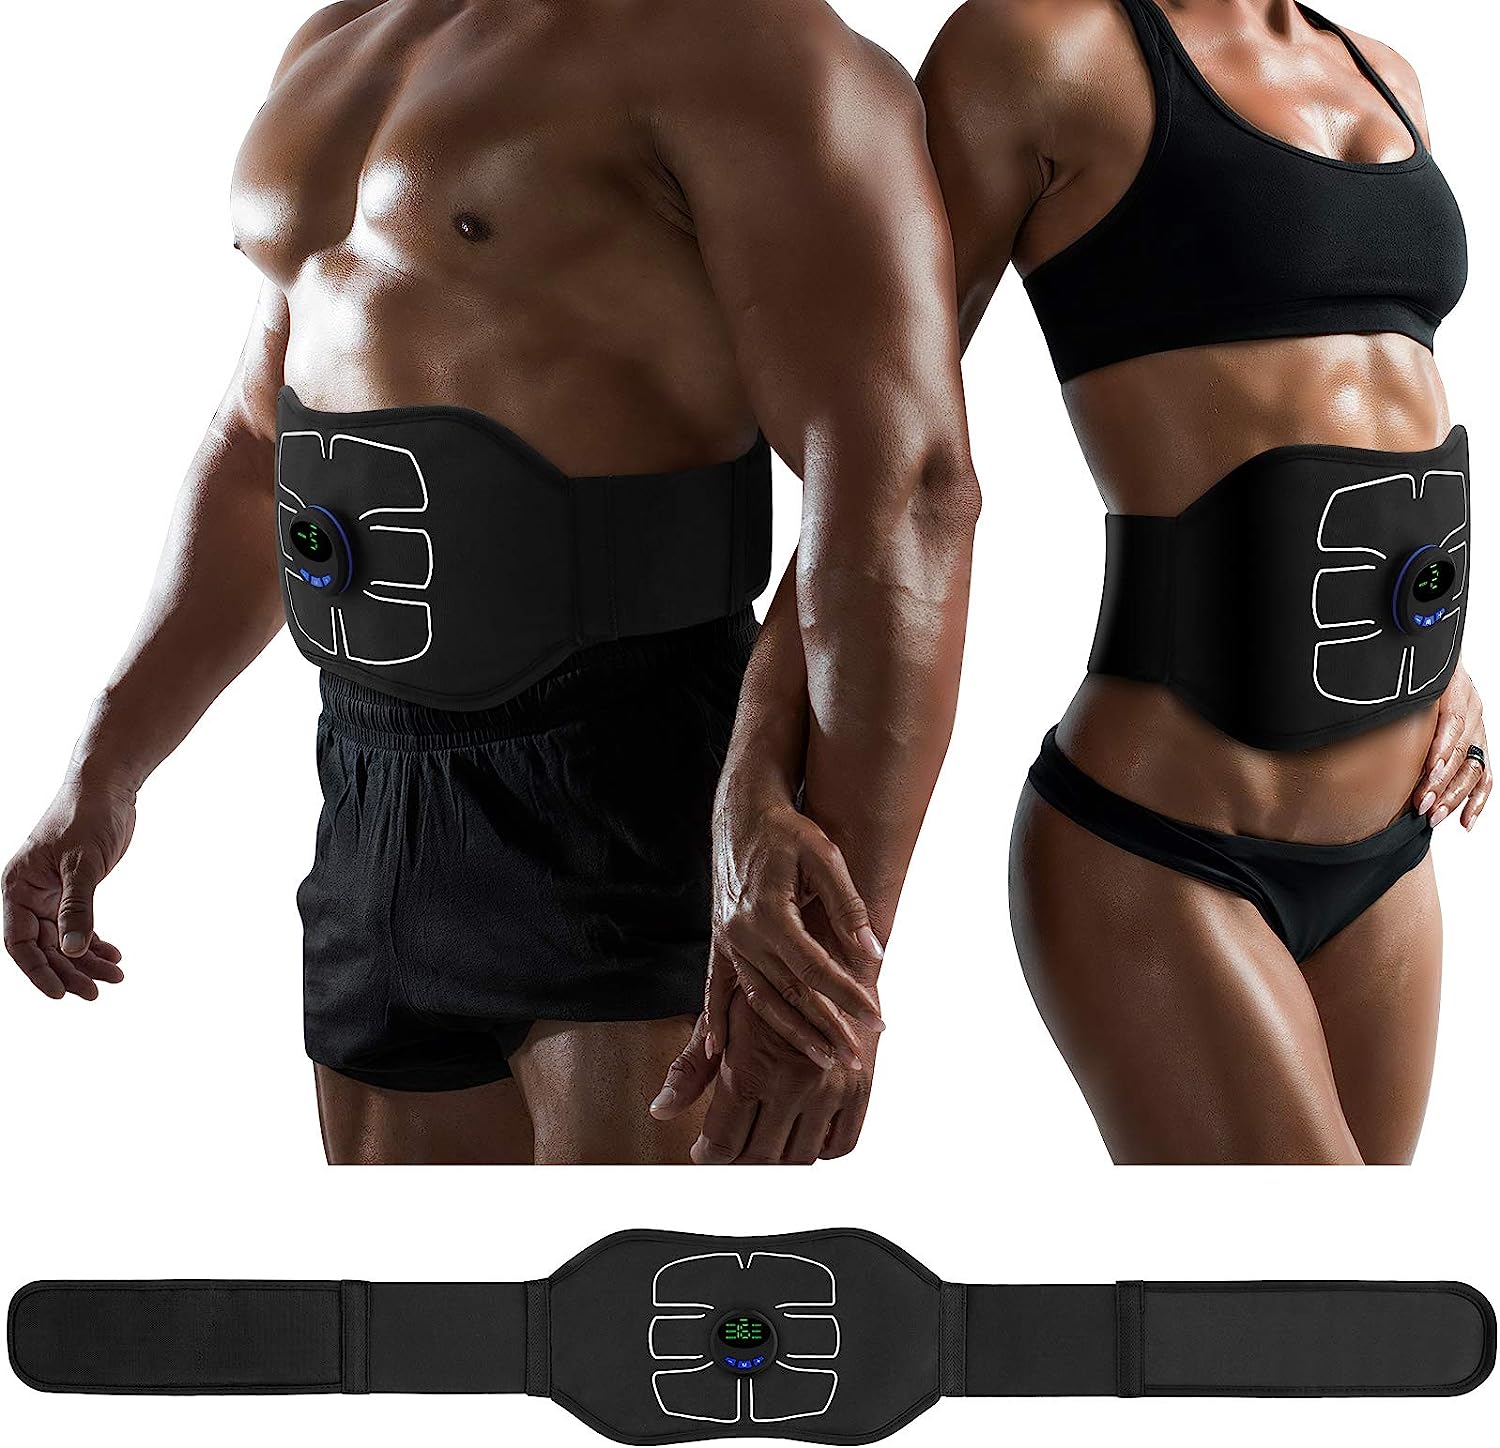 Abdominal Toning Belt Workout Portable Ab Stimulator Home Office Fitness